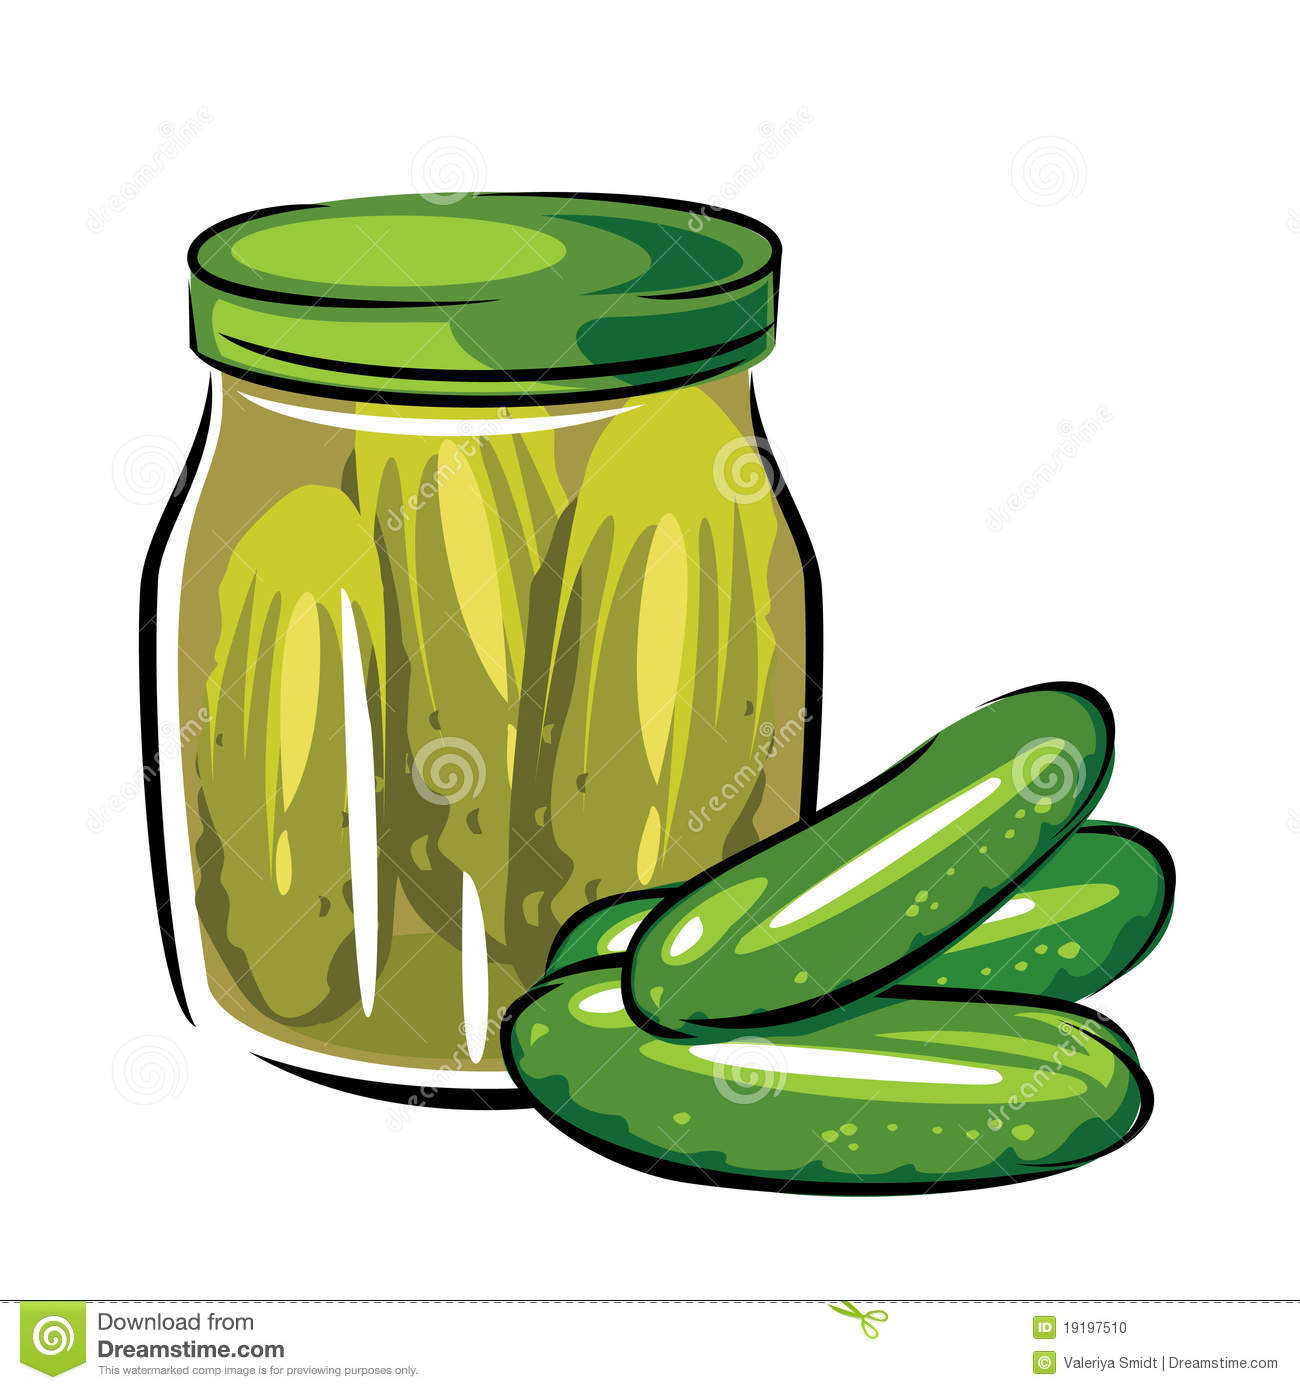 Pickle Stock Illustrations.